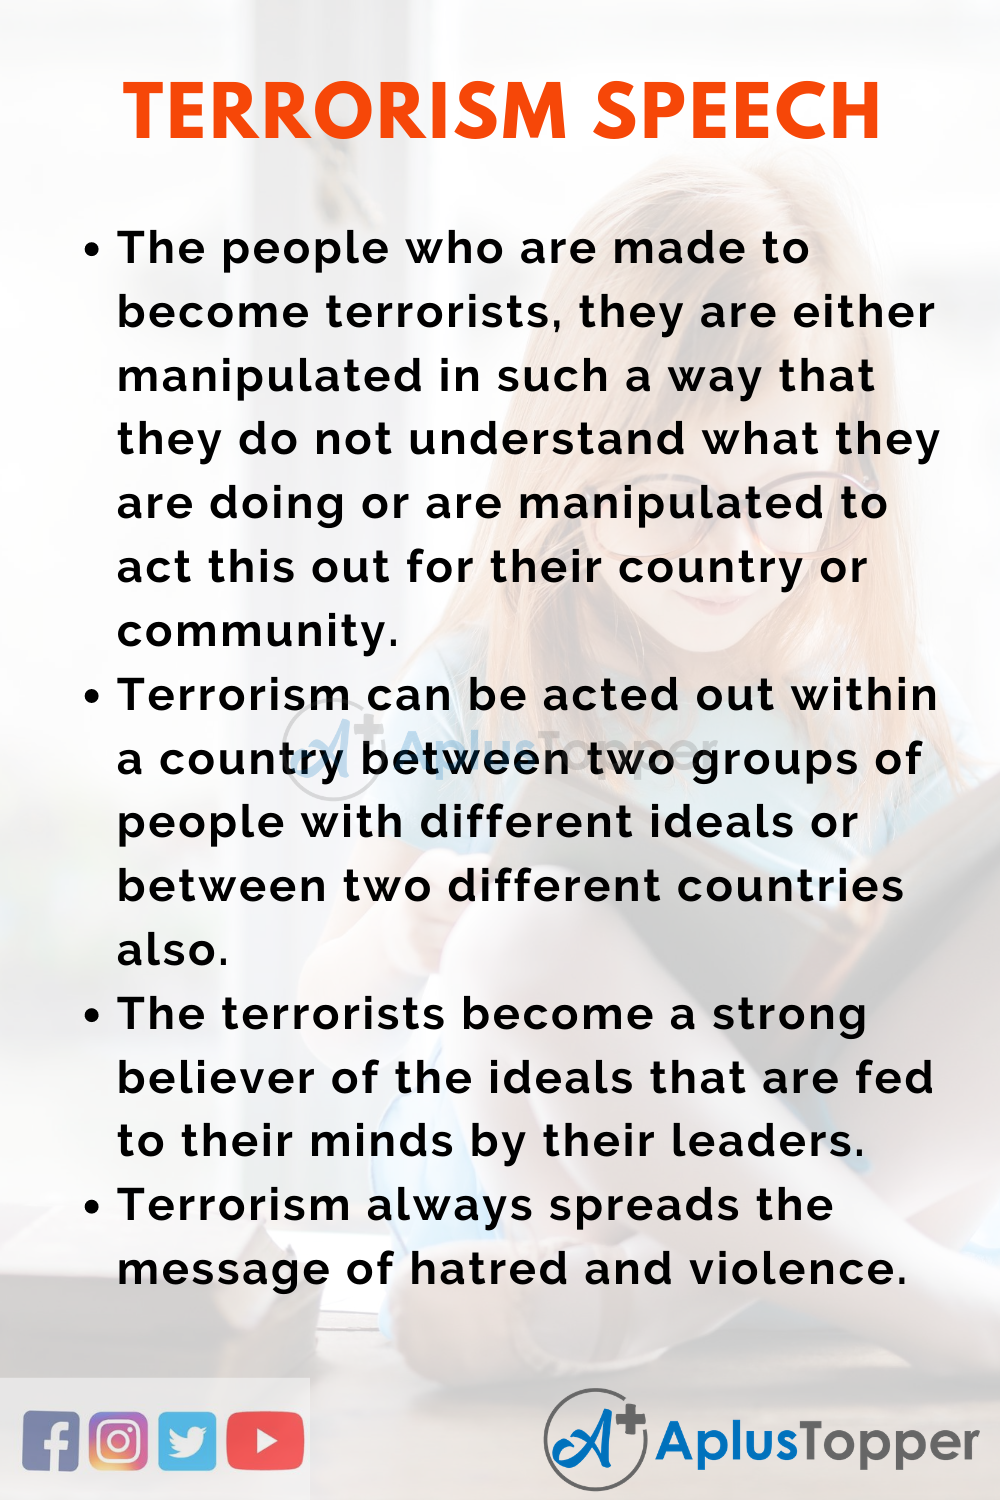 speech on terrorism in simple english